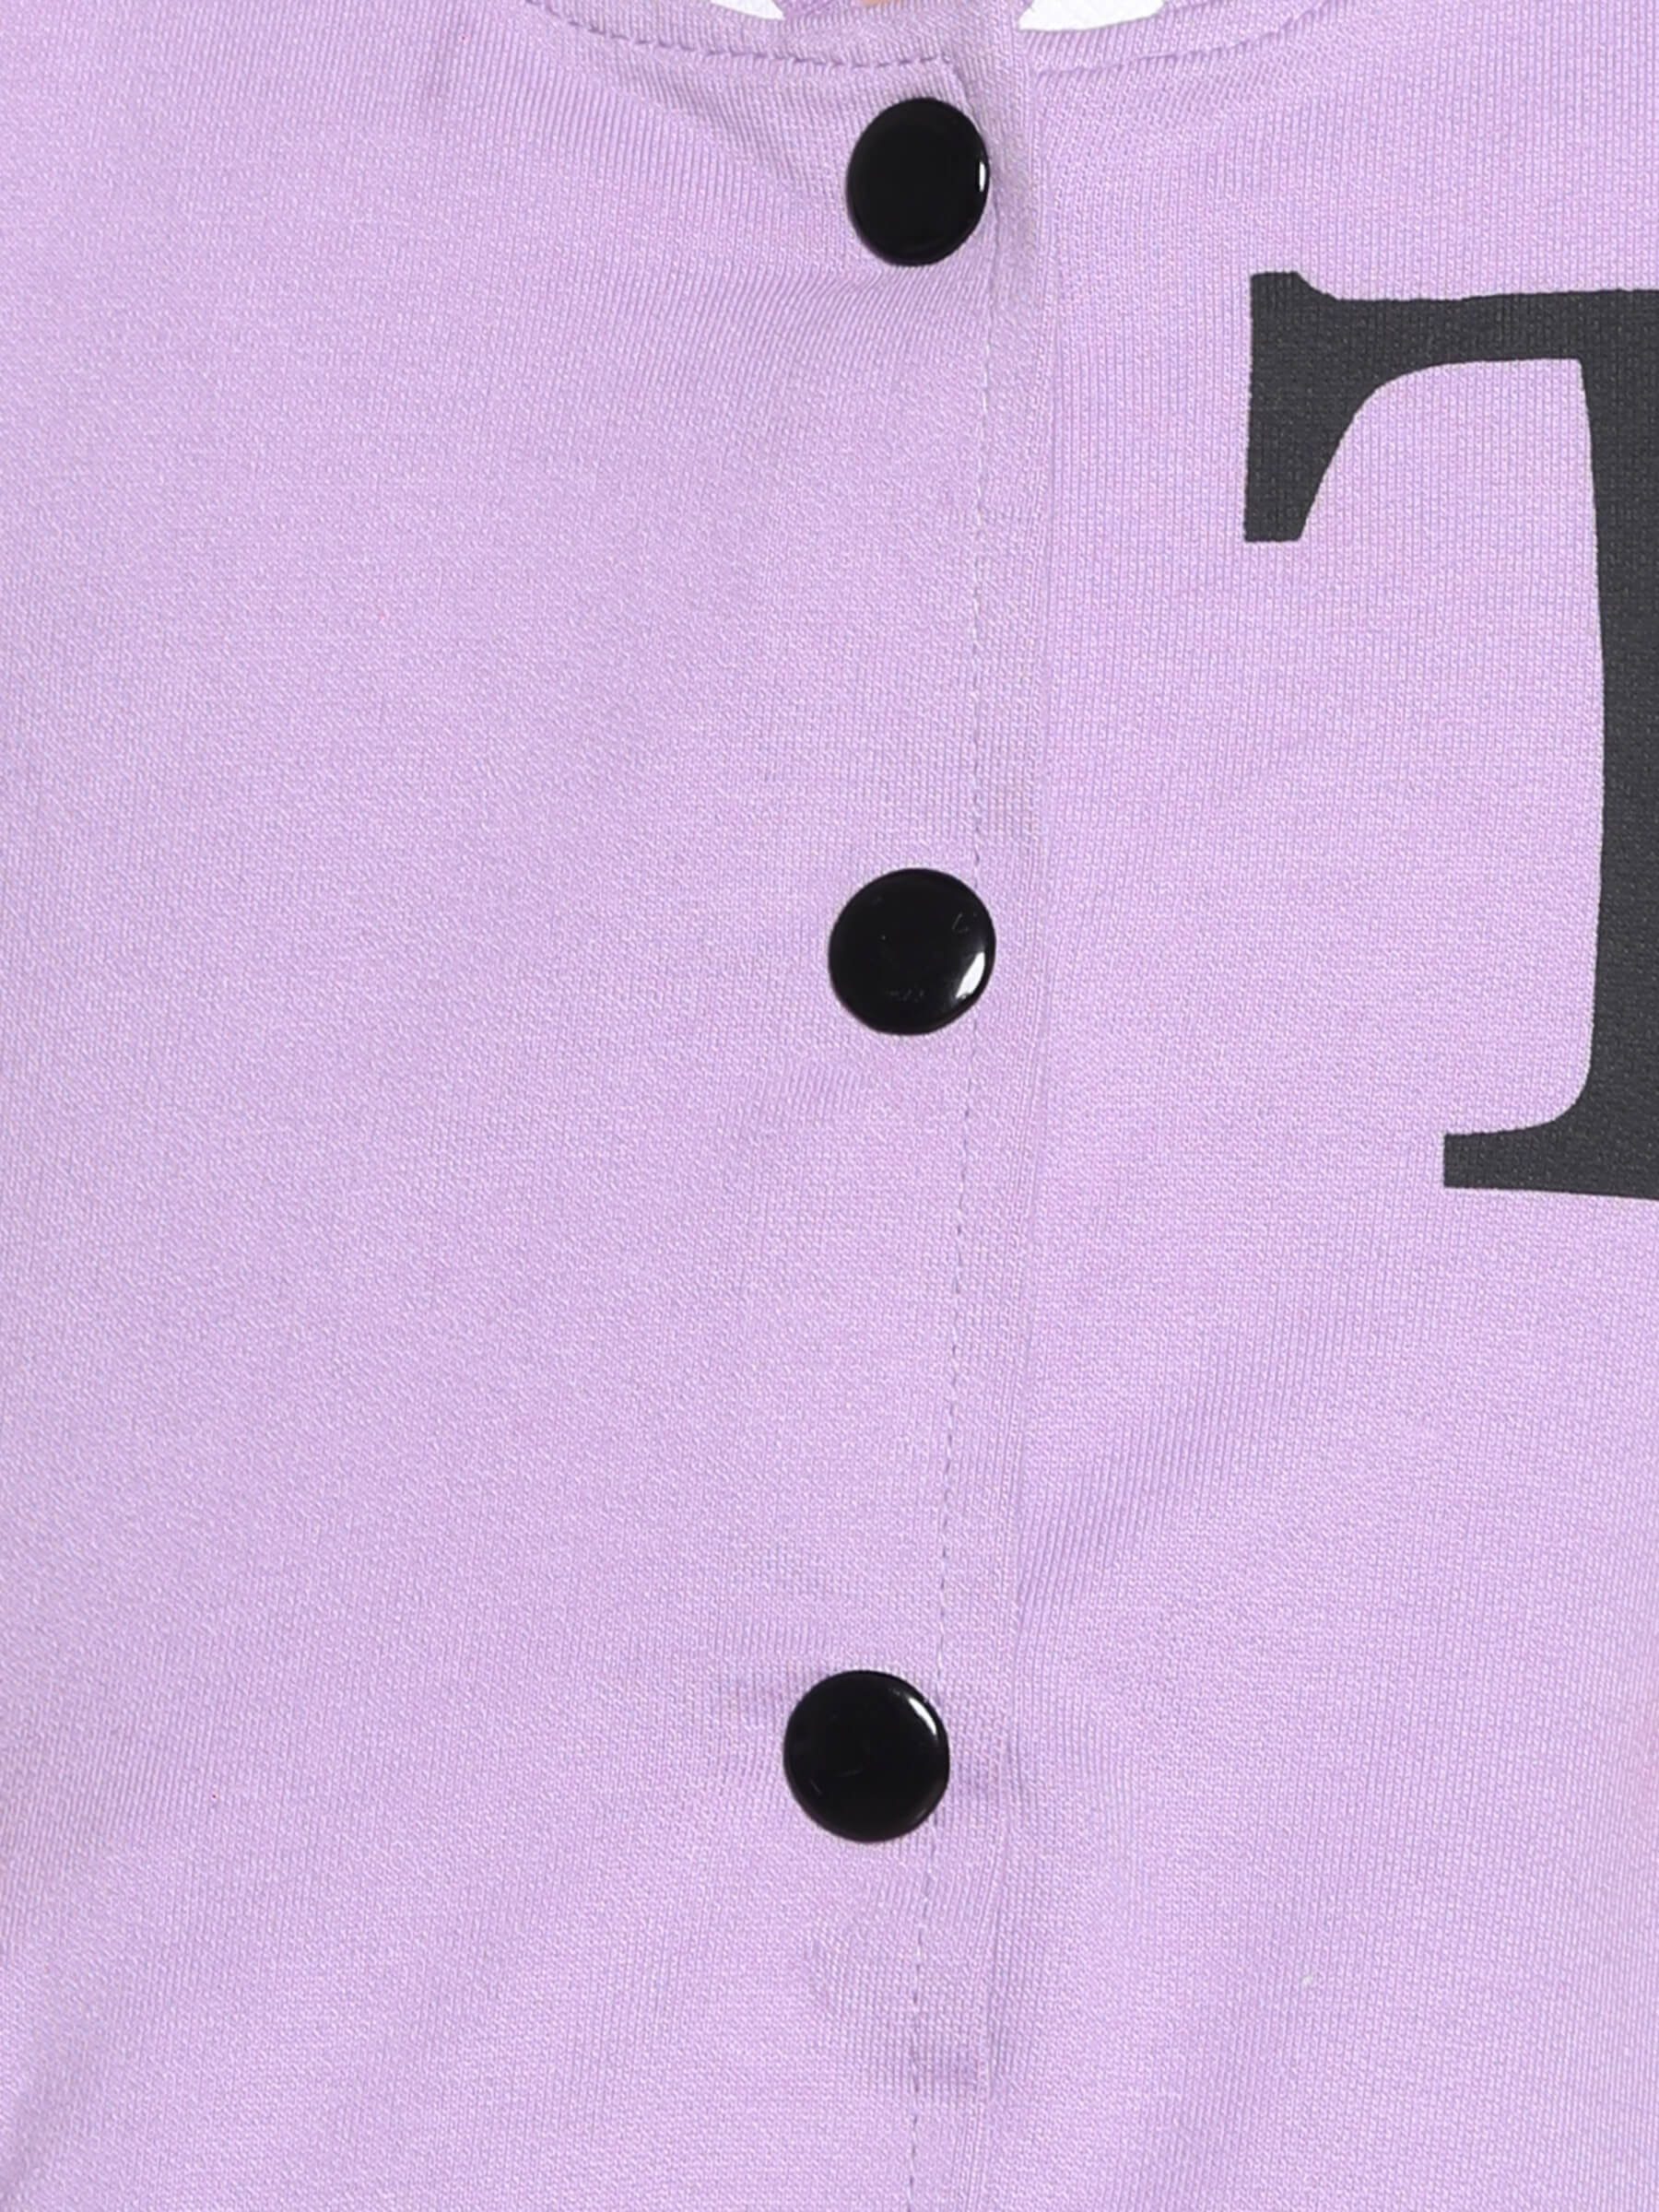 Taffykids 100% cotton color blocked versity jacket-Lilac/White